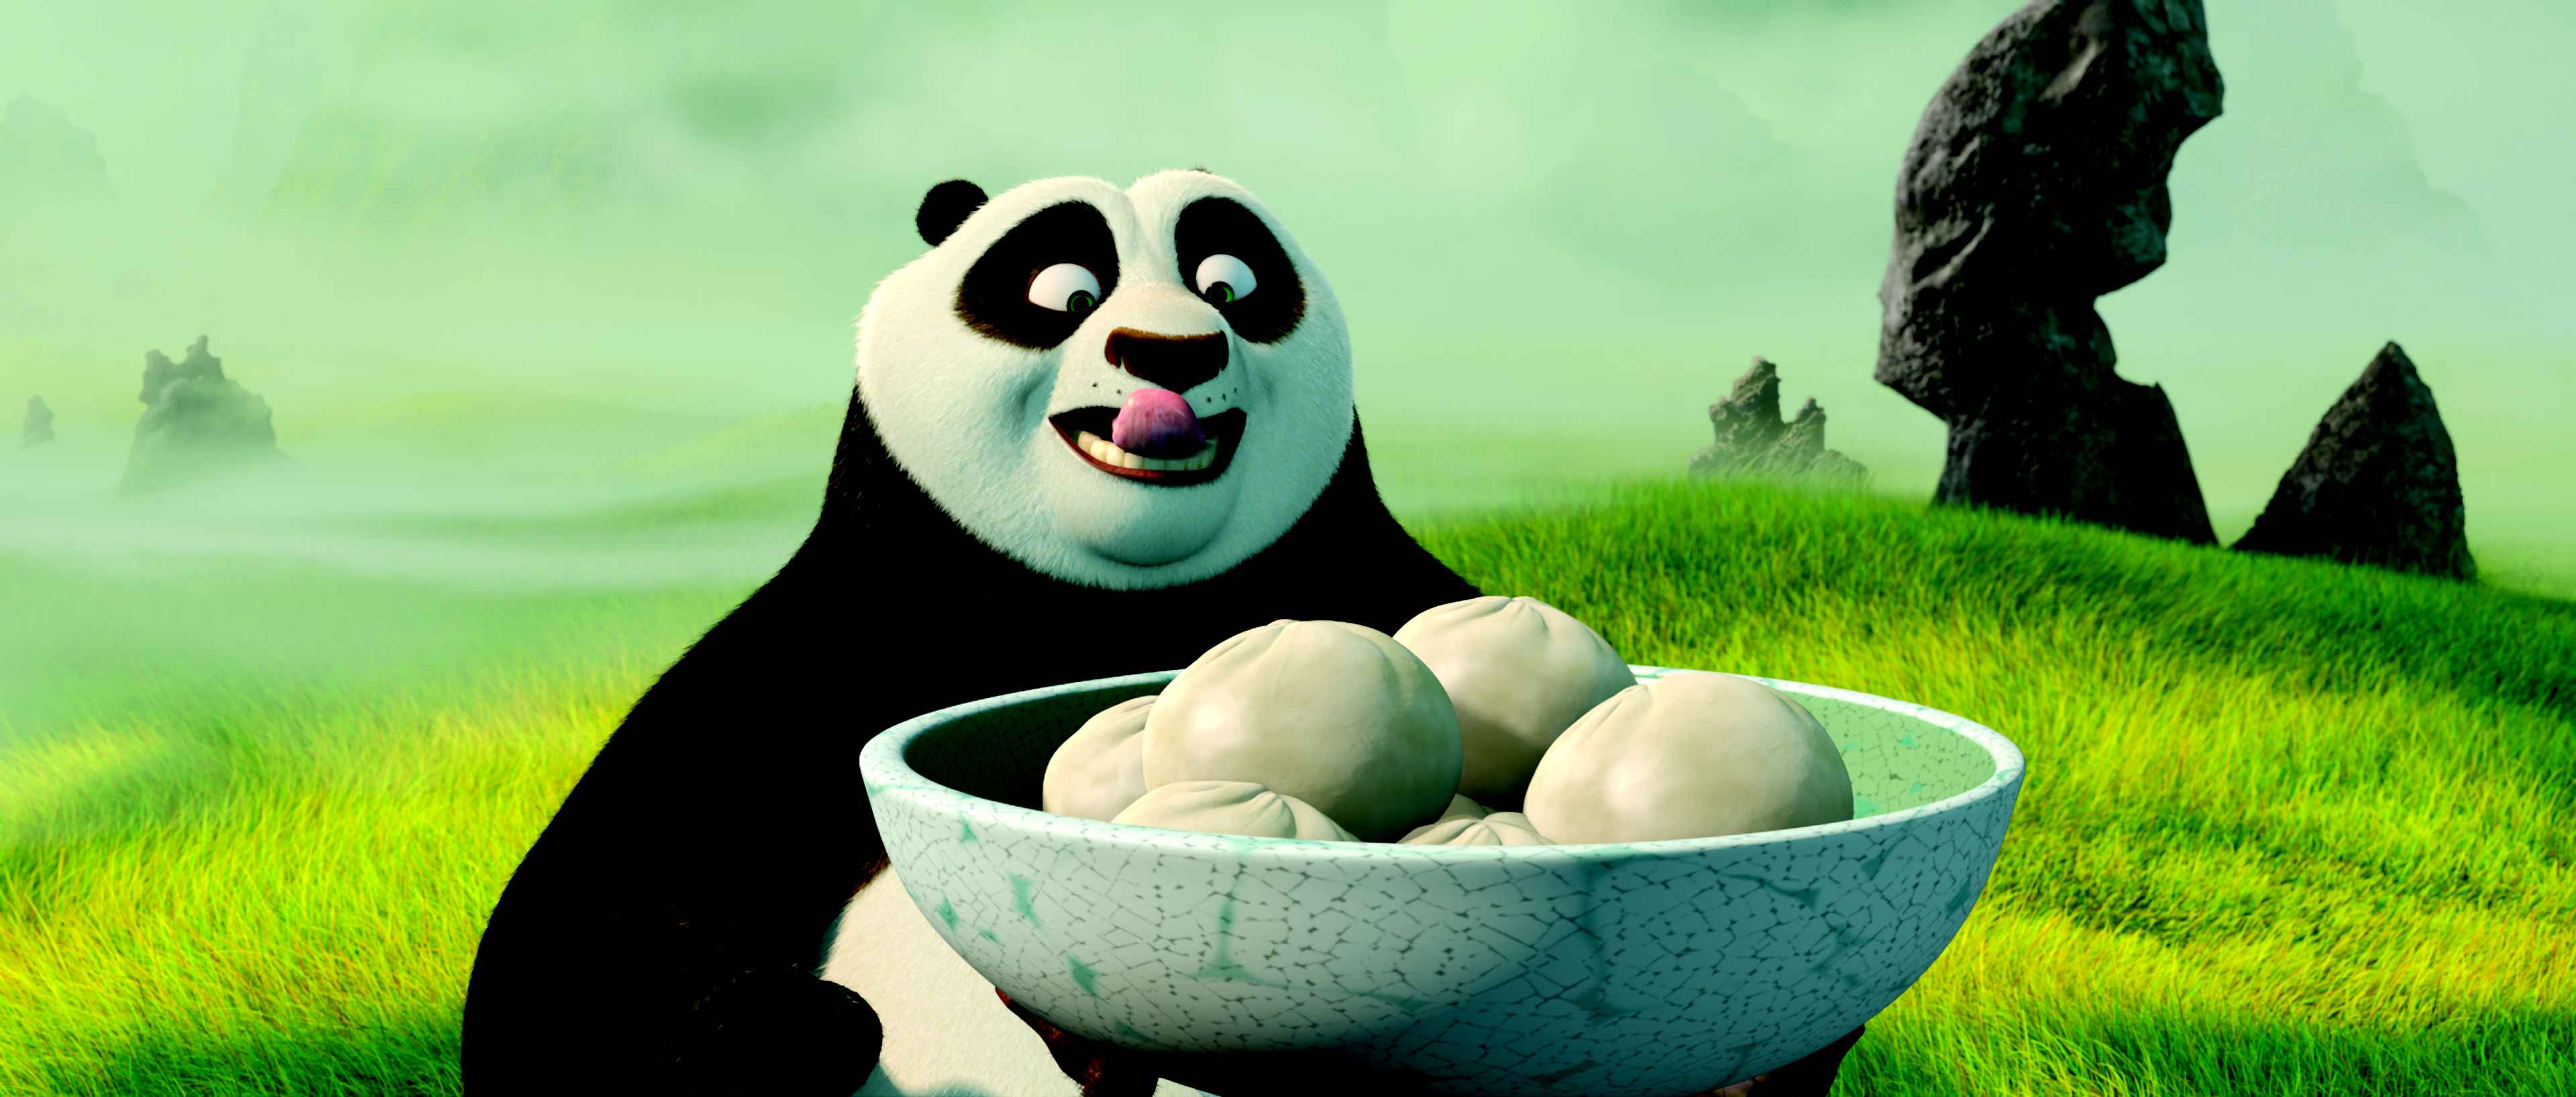 365064 descargar imagen po (kung fu panda), películas, kung fu panda 3, kung fu panda: fondos de pantalla y protectores de pantalla gratis